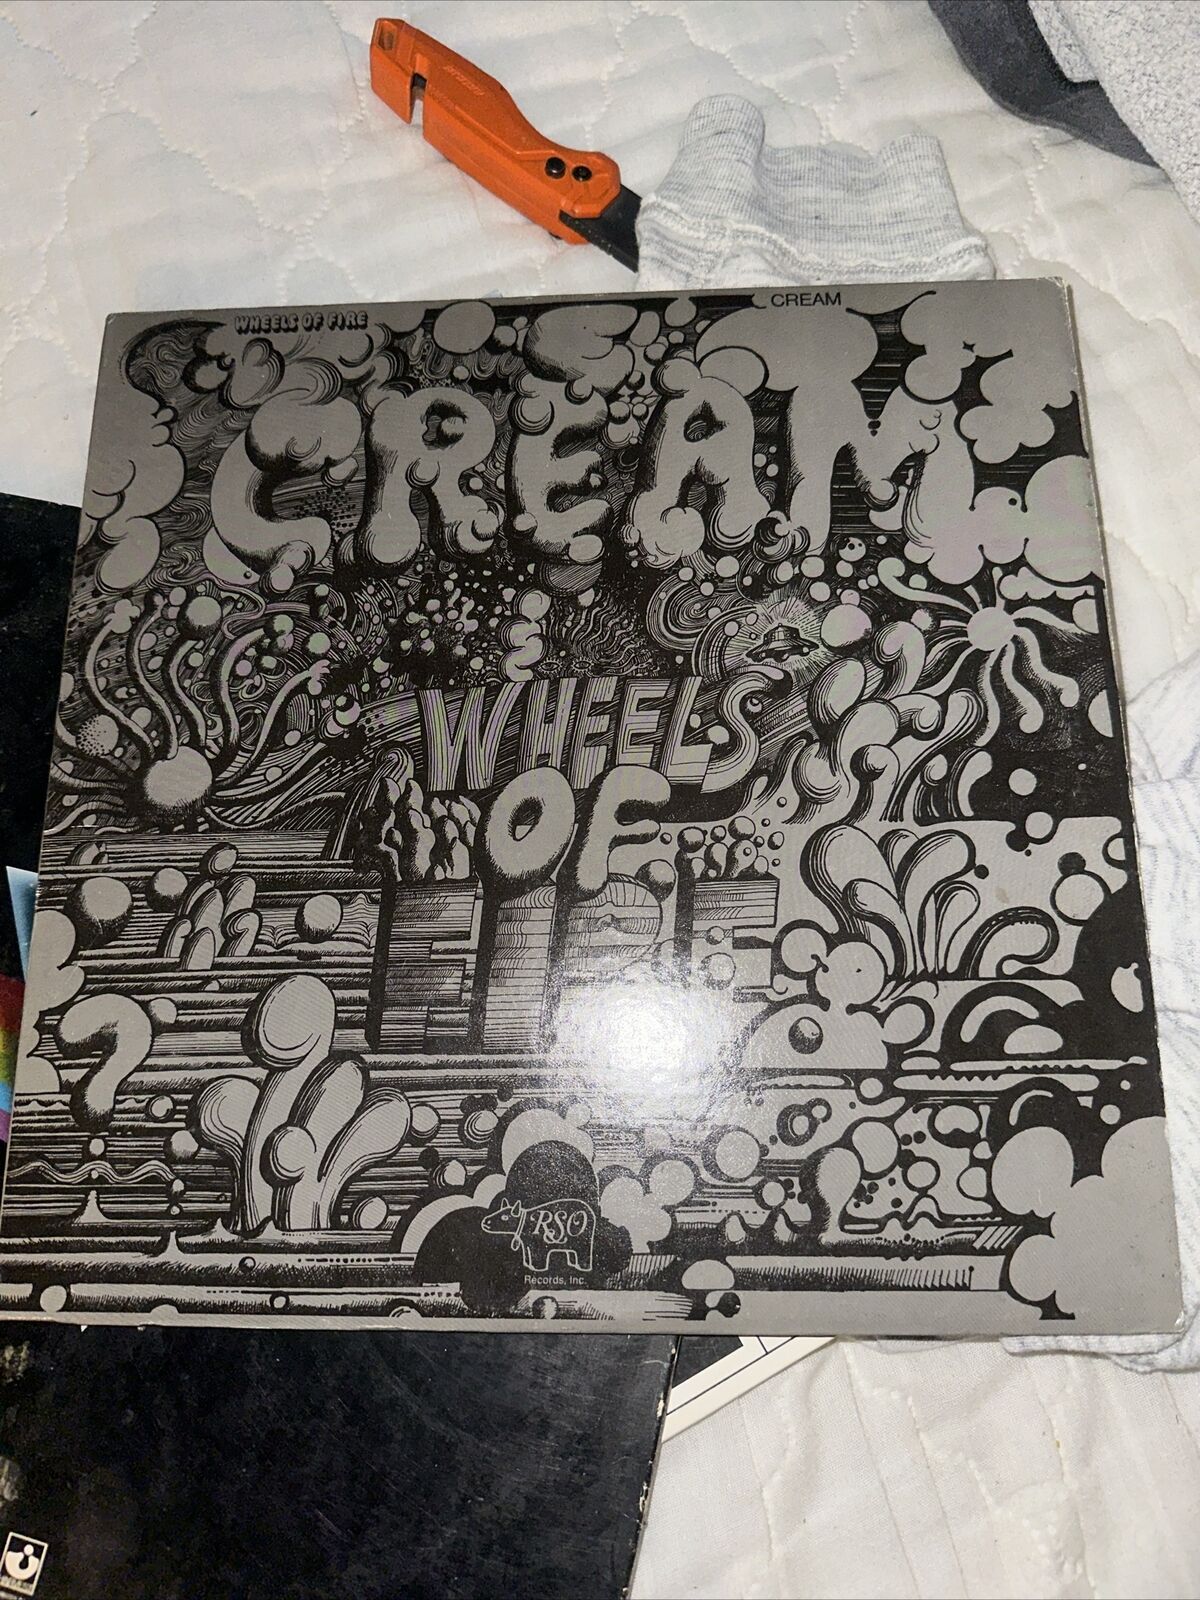 Cream Wheels Of Fire - Vinyl